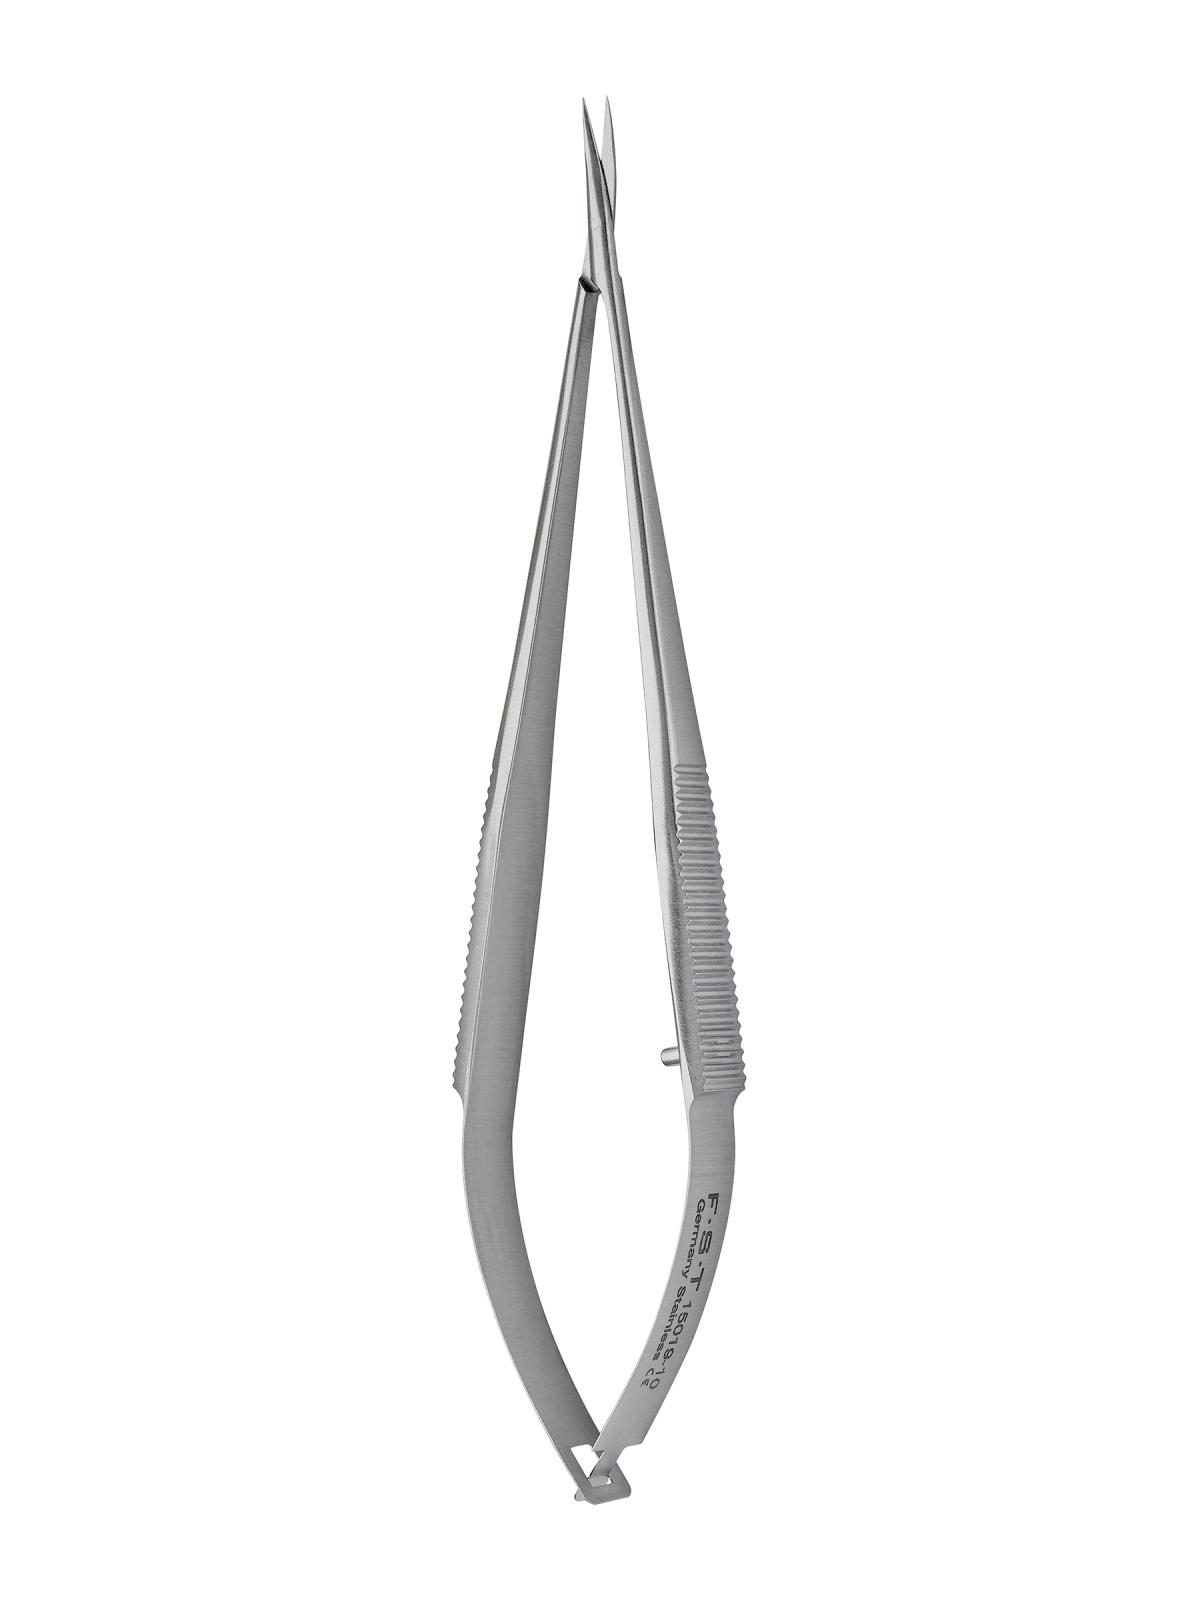 Fine Science Tools Fine Scissors, Sharp (Left-Handed), Stainless Steel,  10.5 cm